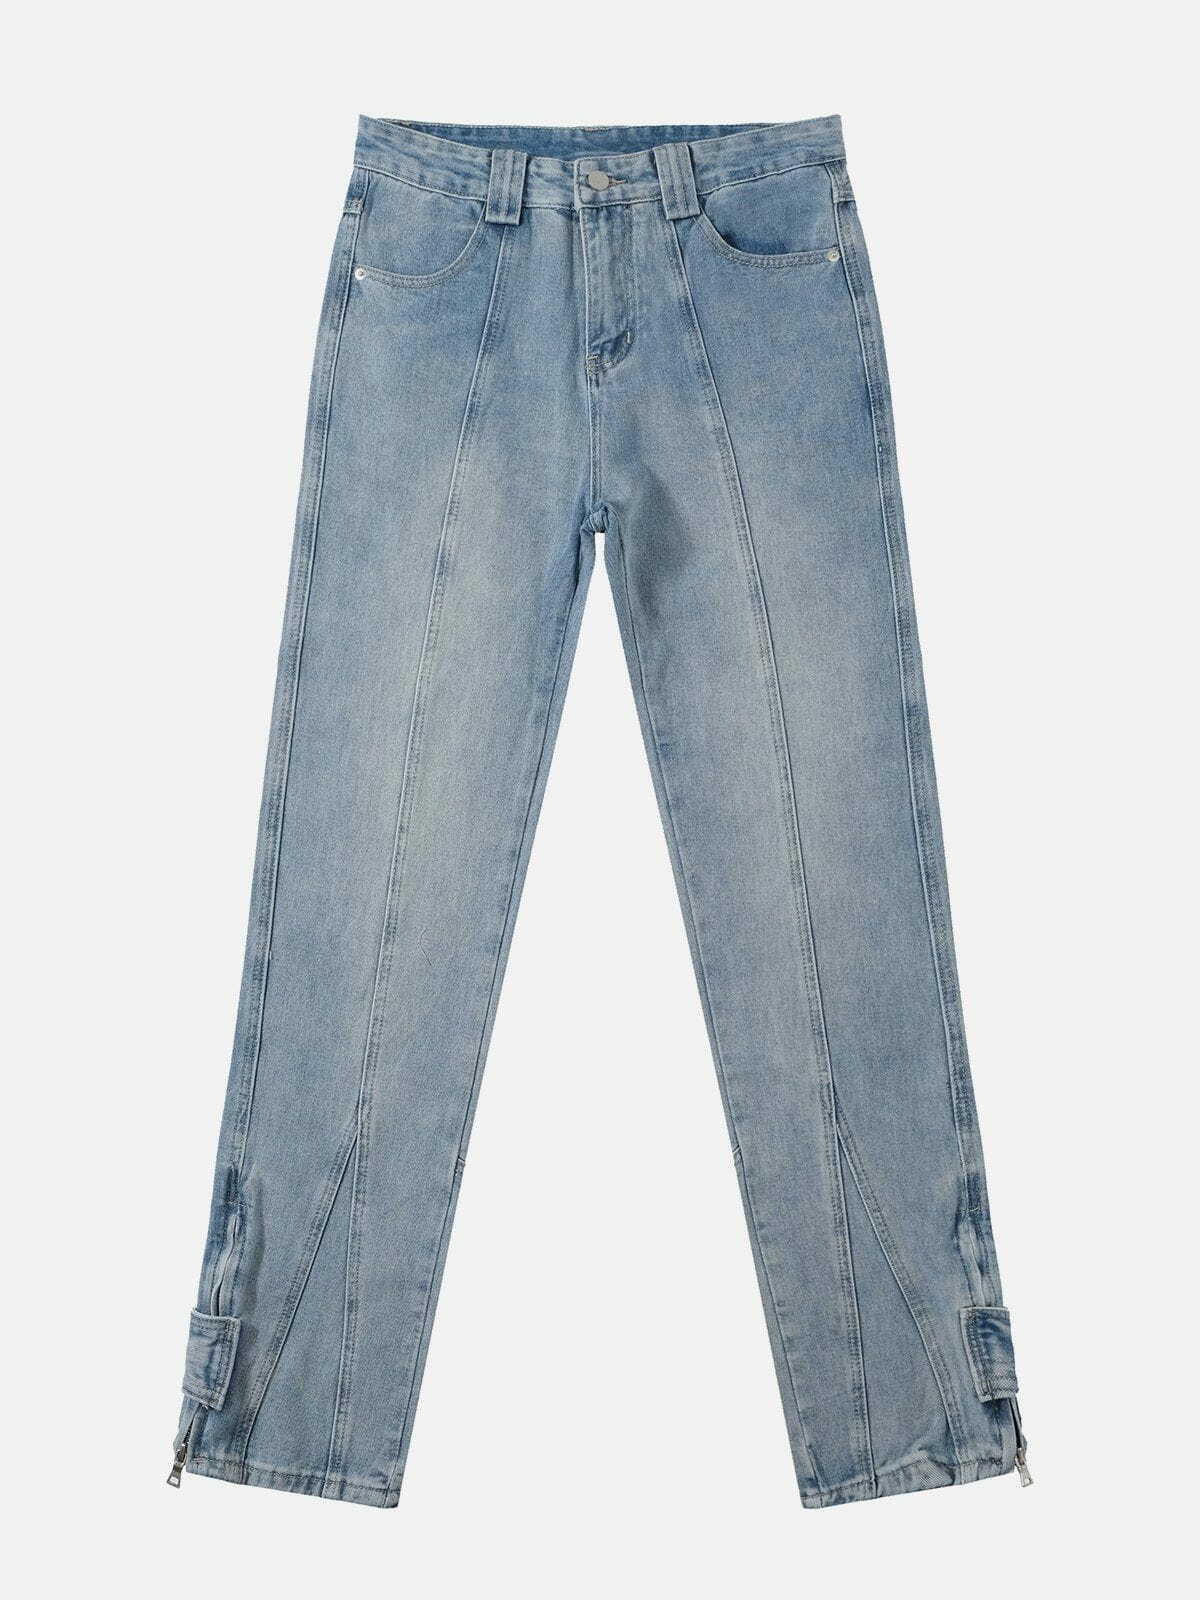 retro split jeans edgy & vintage washed 7091